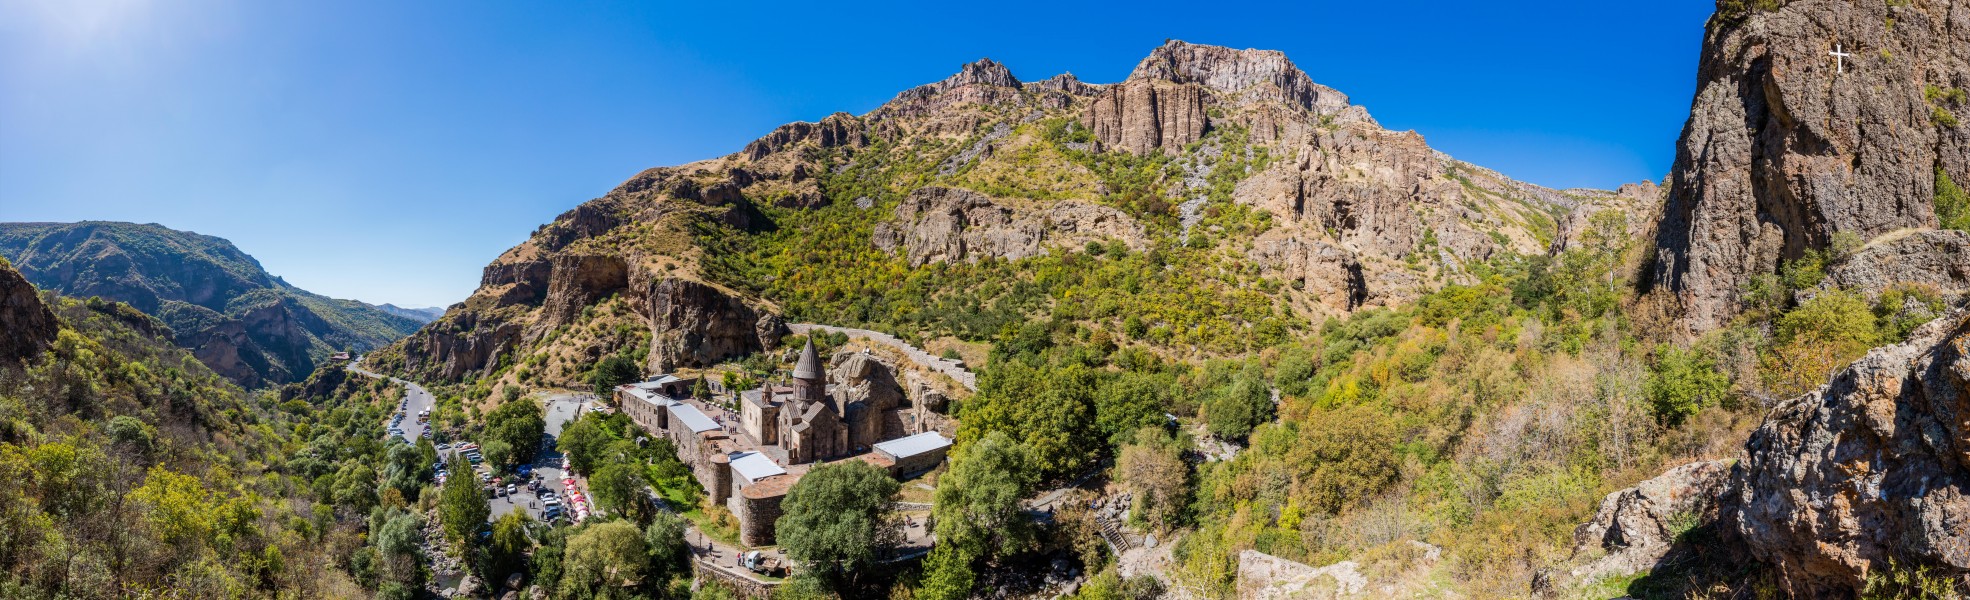 Monasterio de Geghard, Armenia, 2016-10-02, DD 65-74 PAN